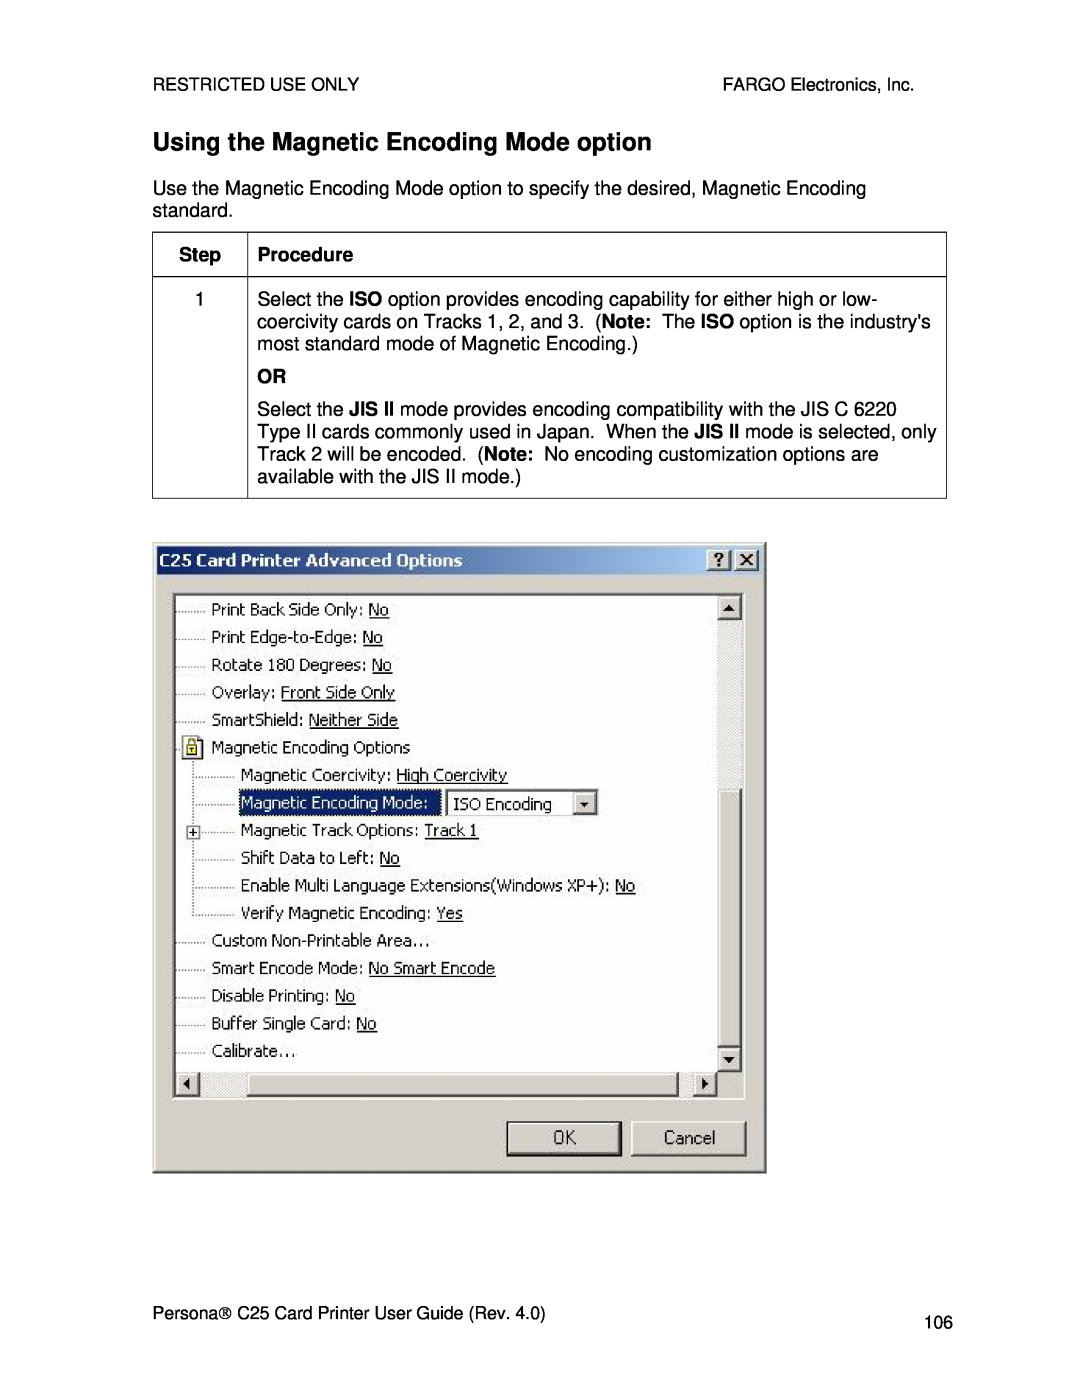 FARGO electronic S000256 manual Using the Magnetic Encoding Mode option 